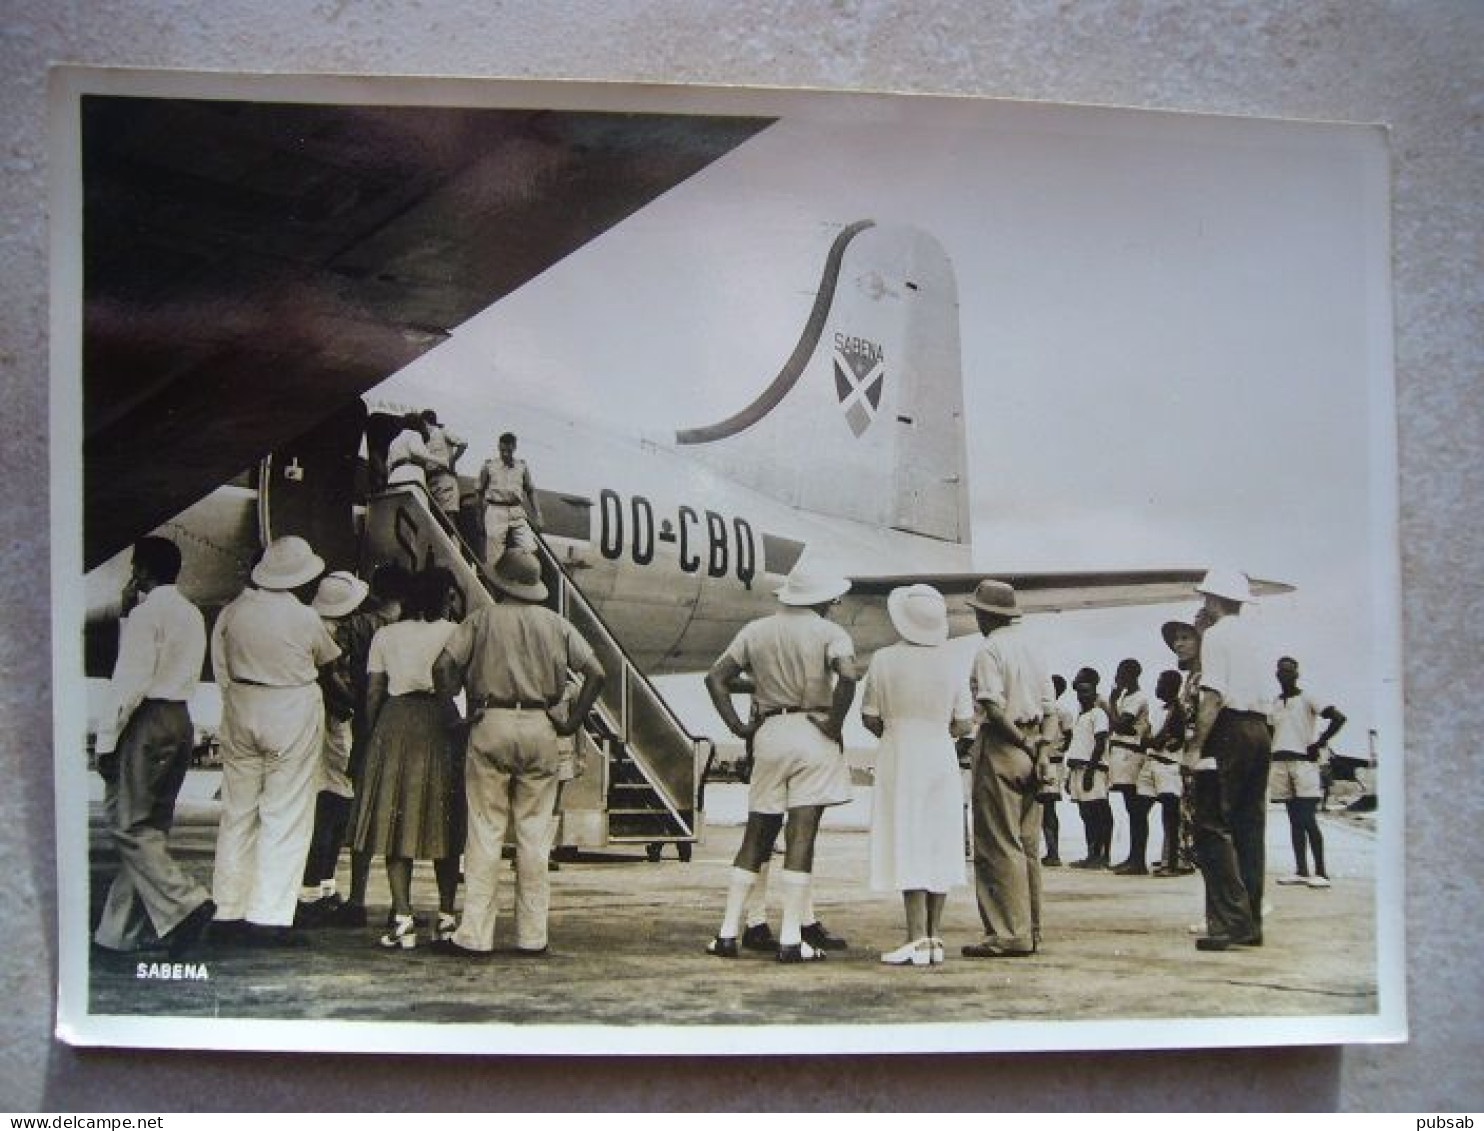 Avion / Airplane / SABENA / Douglas DC-4 / Arrival At Léopoldville Airport / Airline Issue - 1946-....: Era Moderna